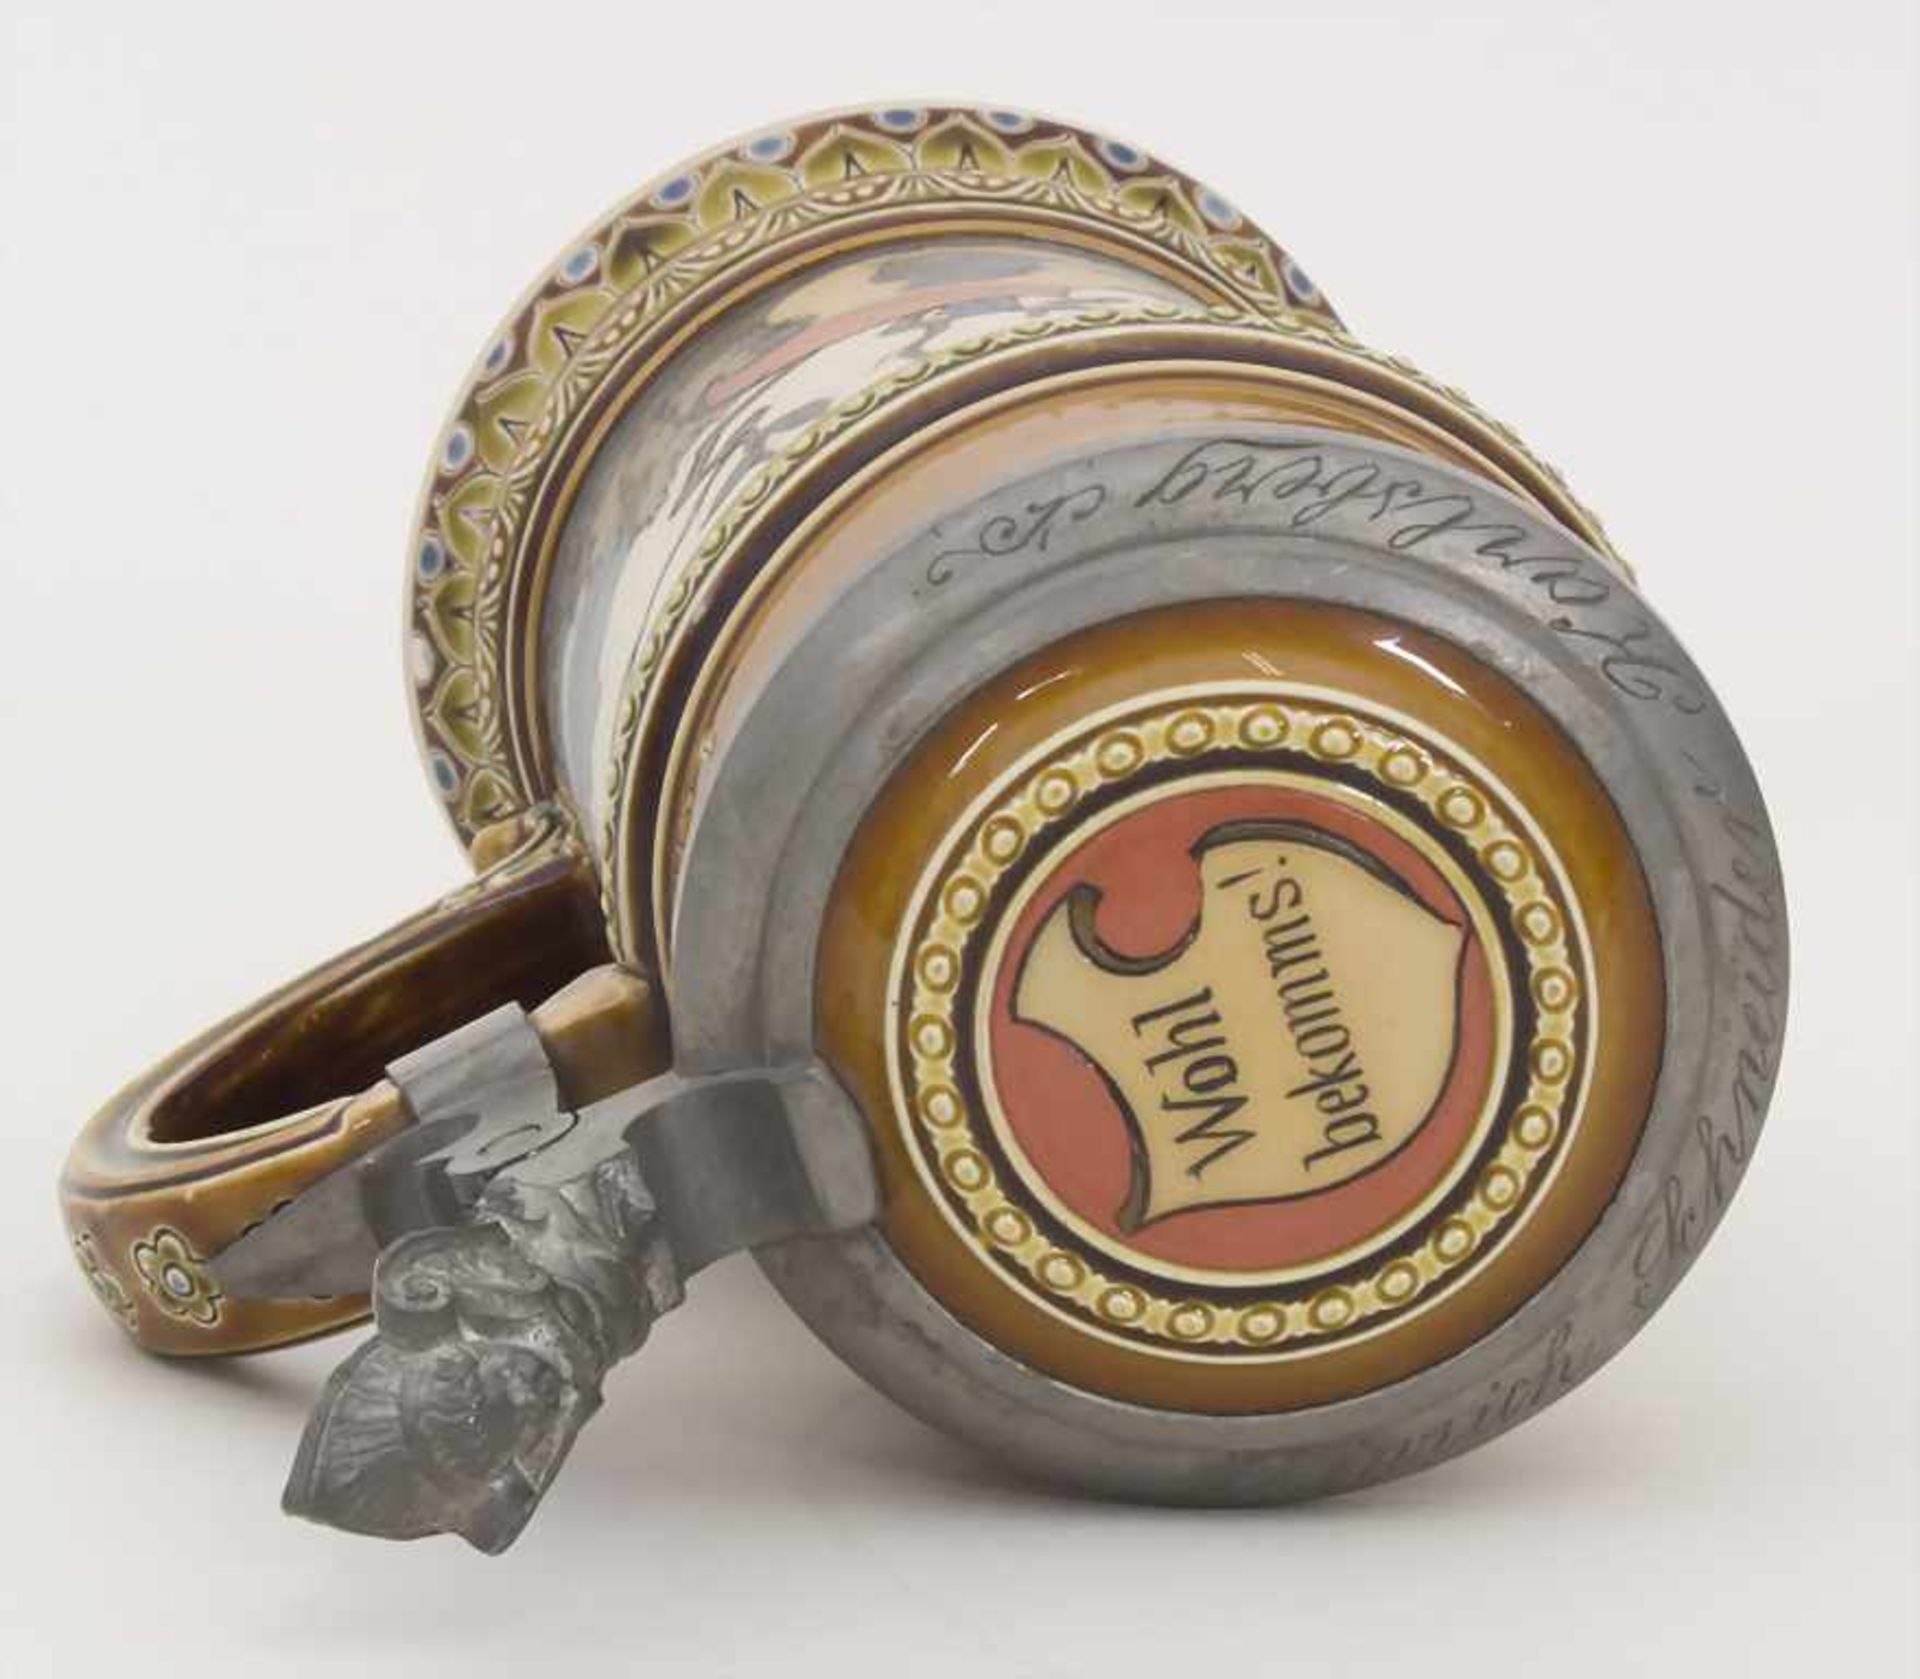 Bierkrug 0,5 L / A stoneware beer mug, Mettlach, Entwurf Christian Warth, um 1894 - Image 5 of 8